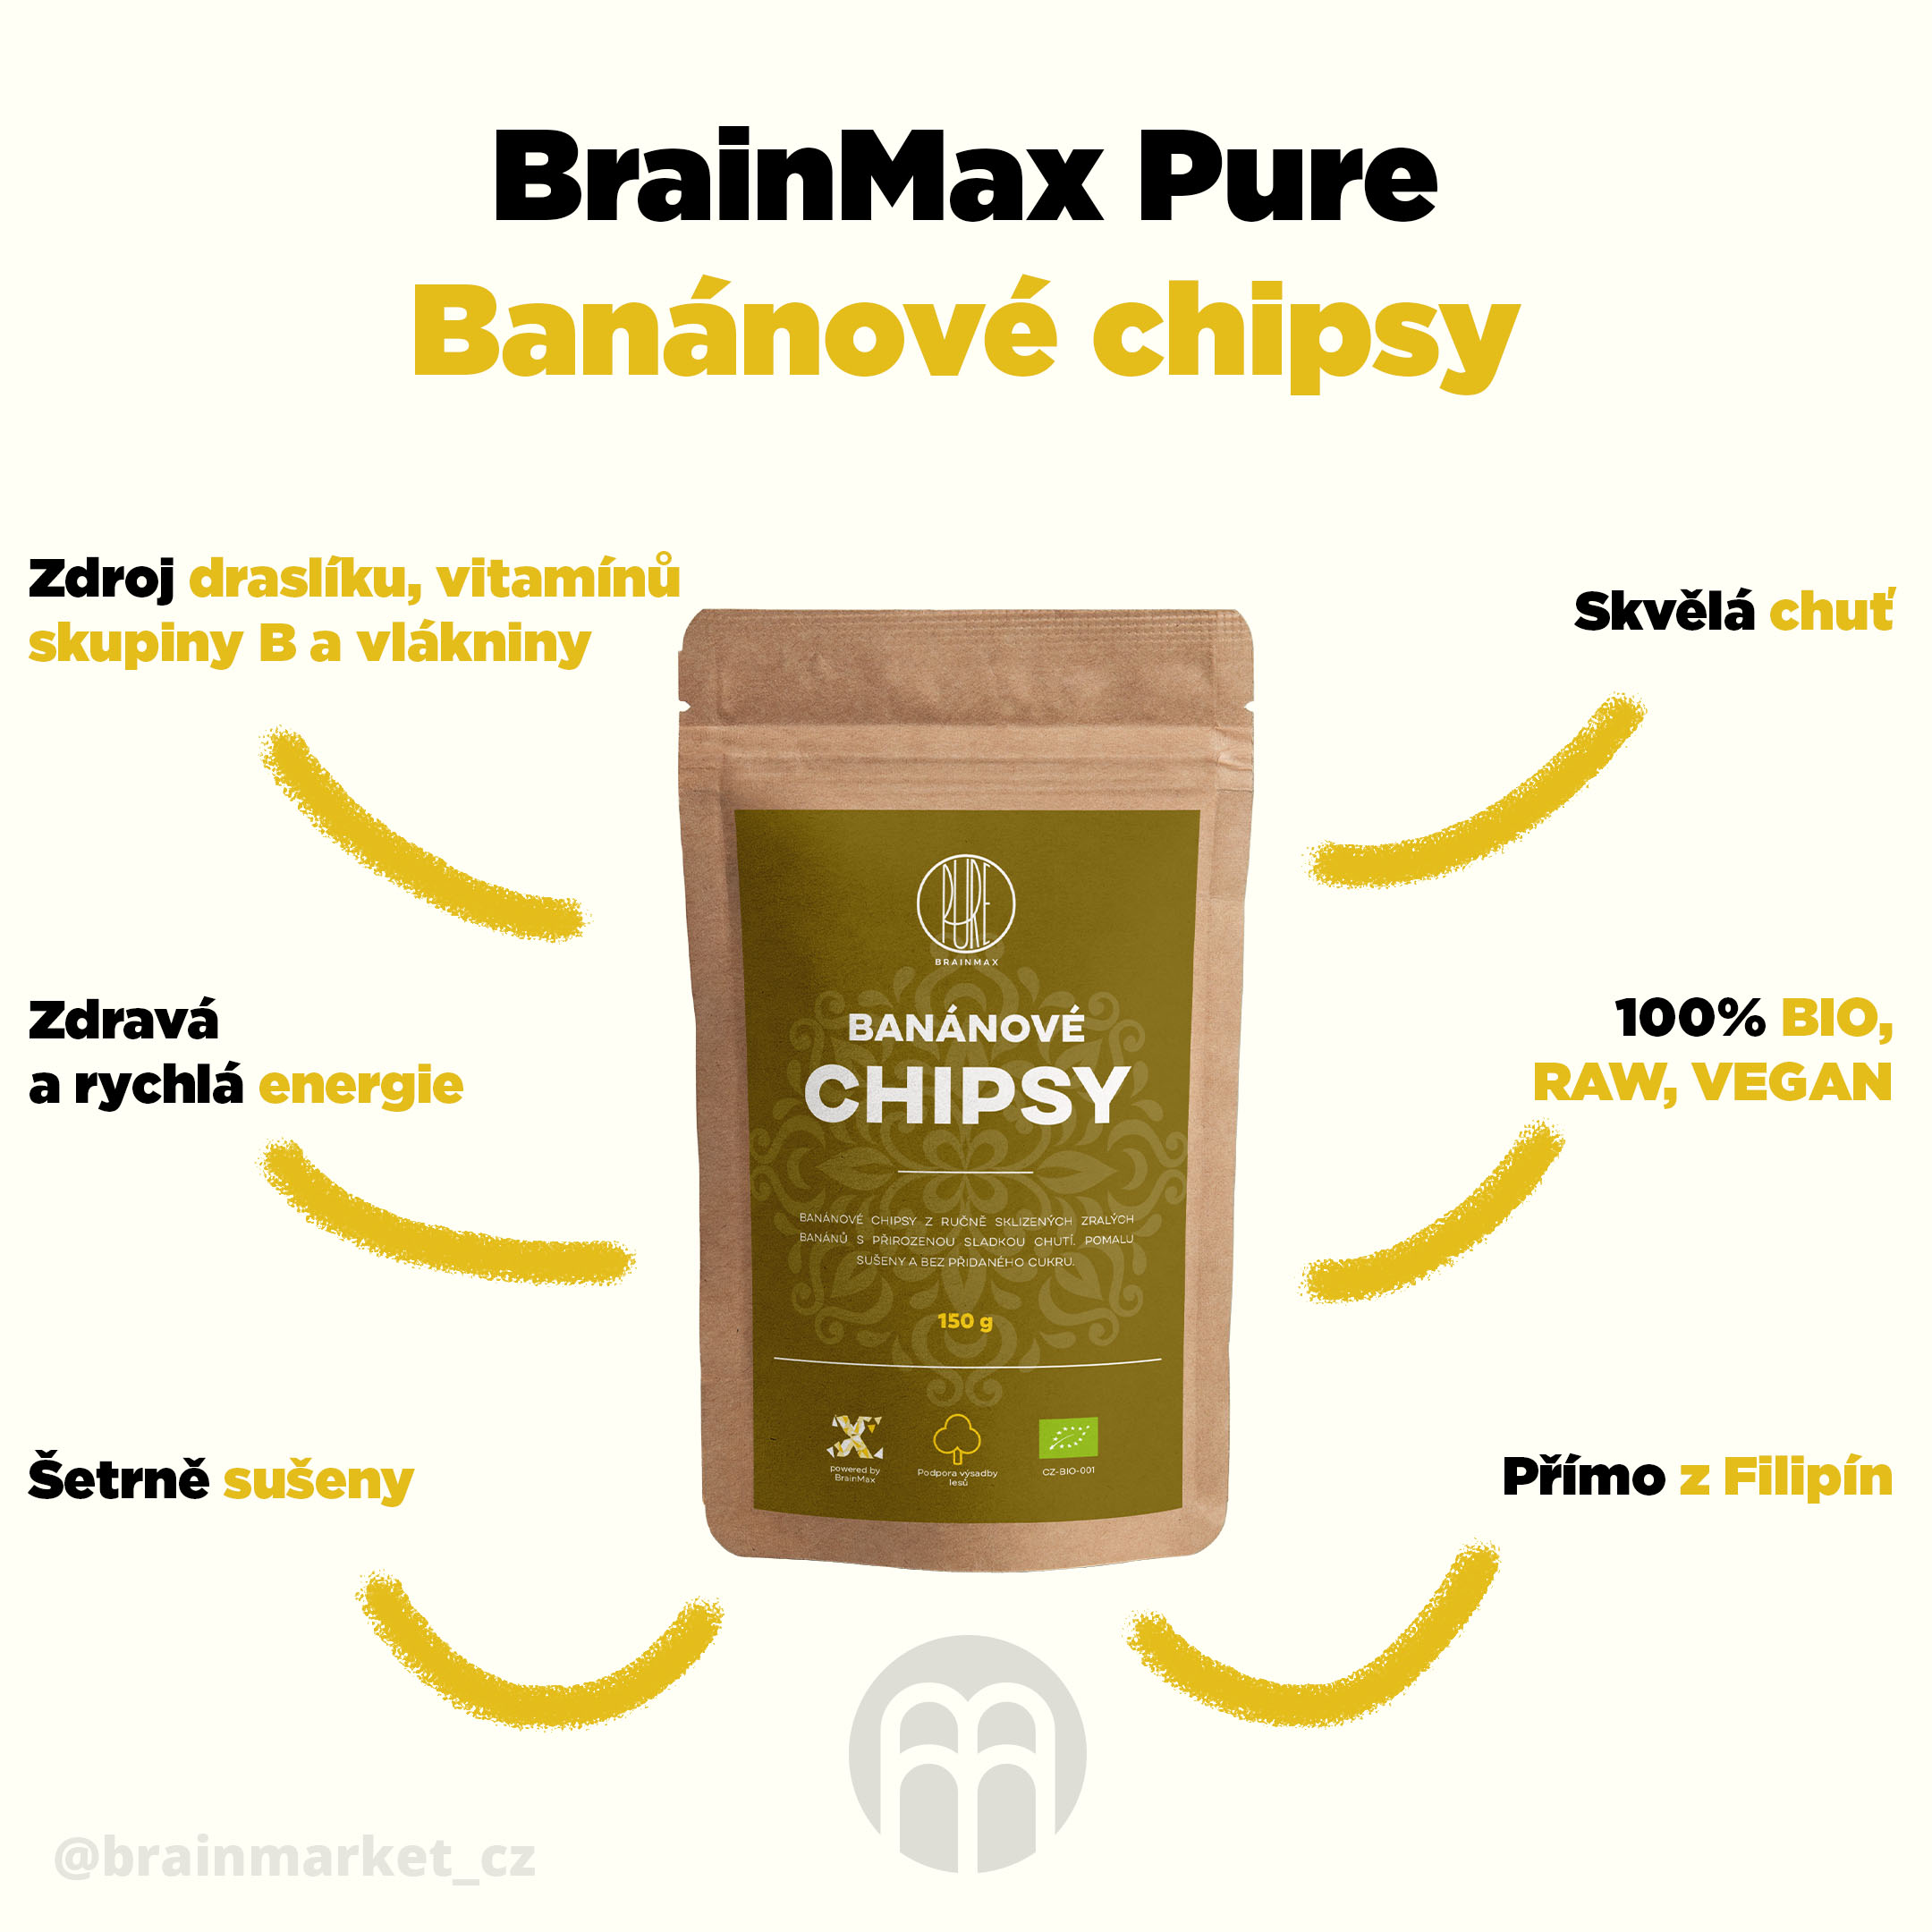 bananove-chipsy-infografika-brainmarket-cz (1)